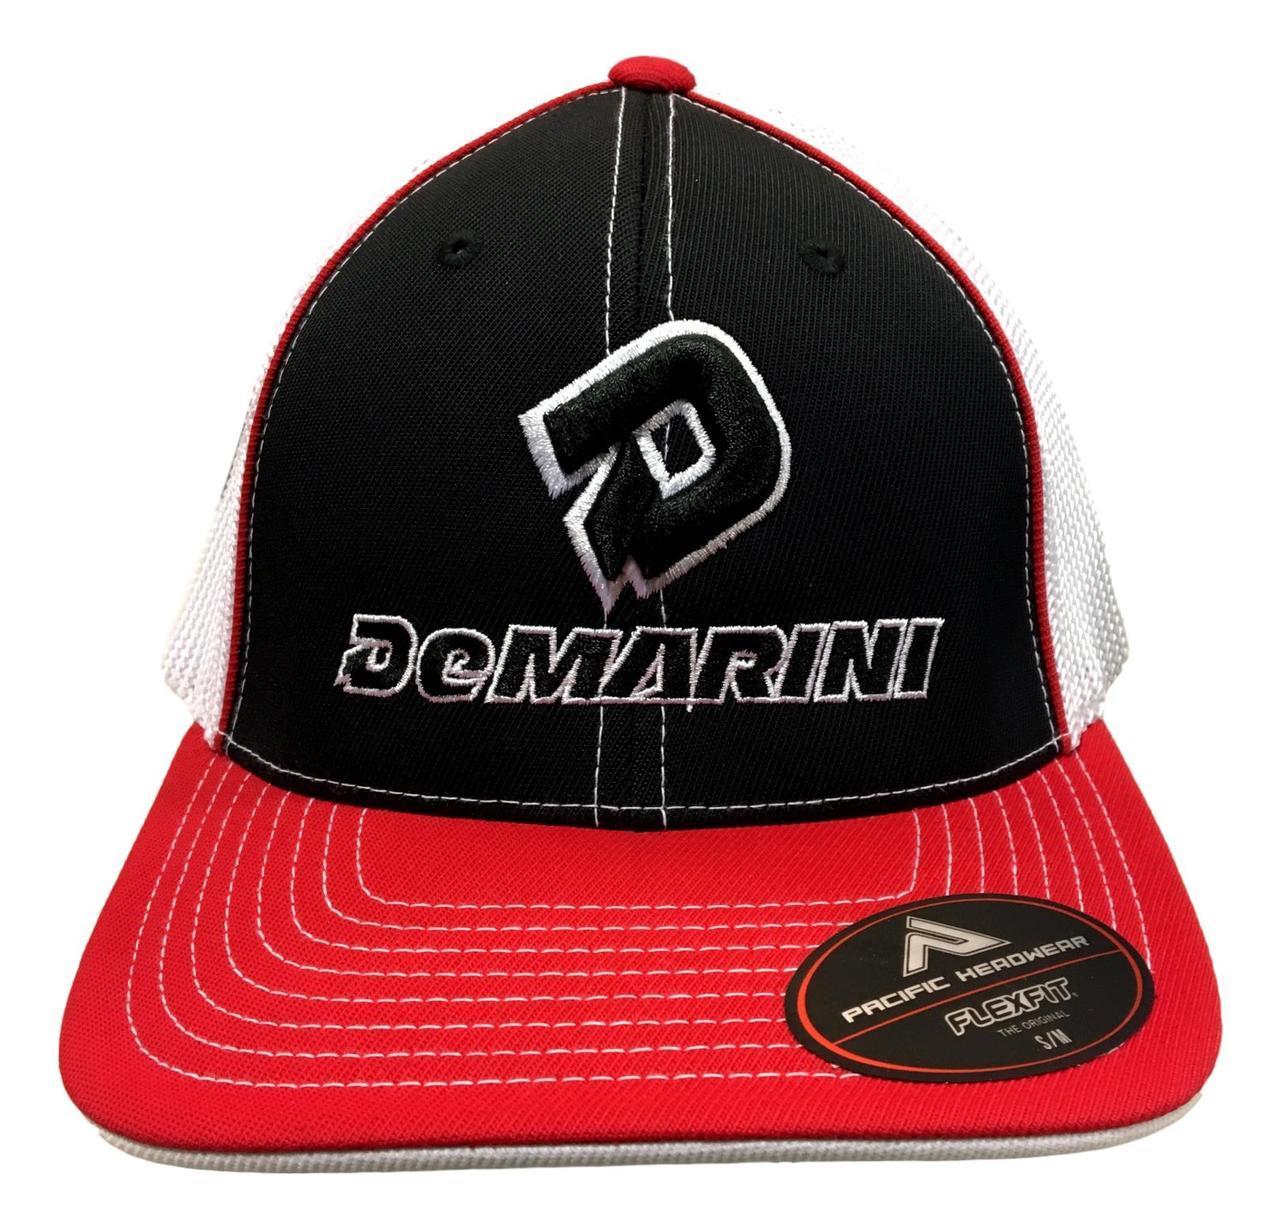 DeMarini Logo - DEMARINI LOGO HAT BLKWHT American Athletics